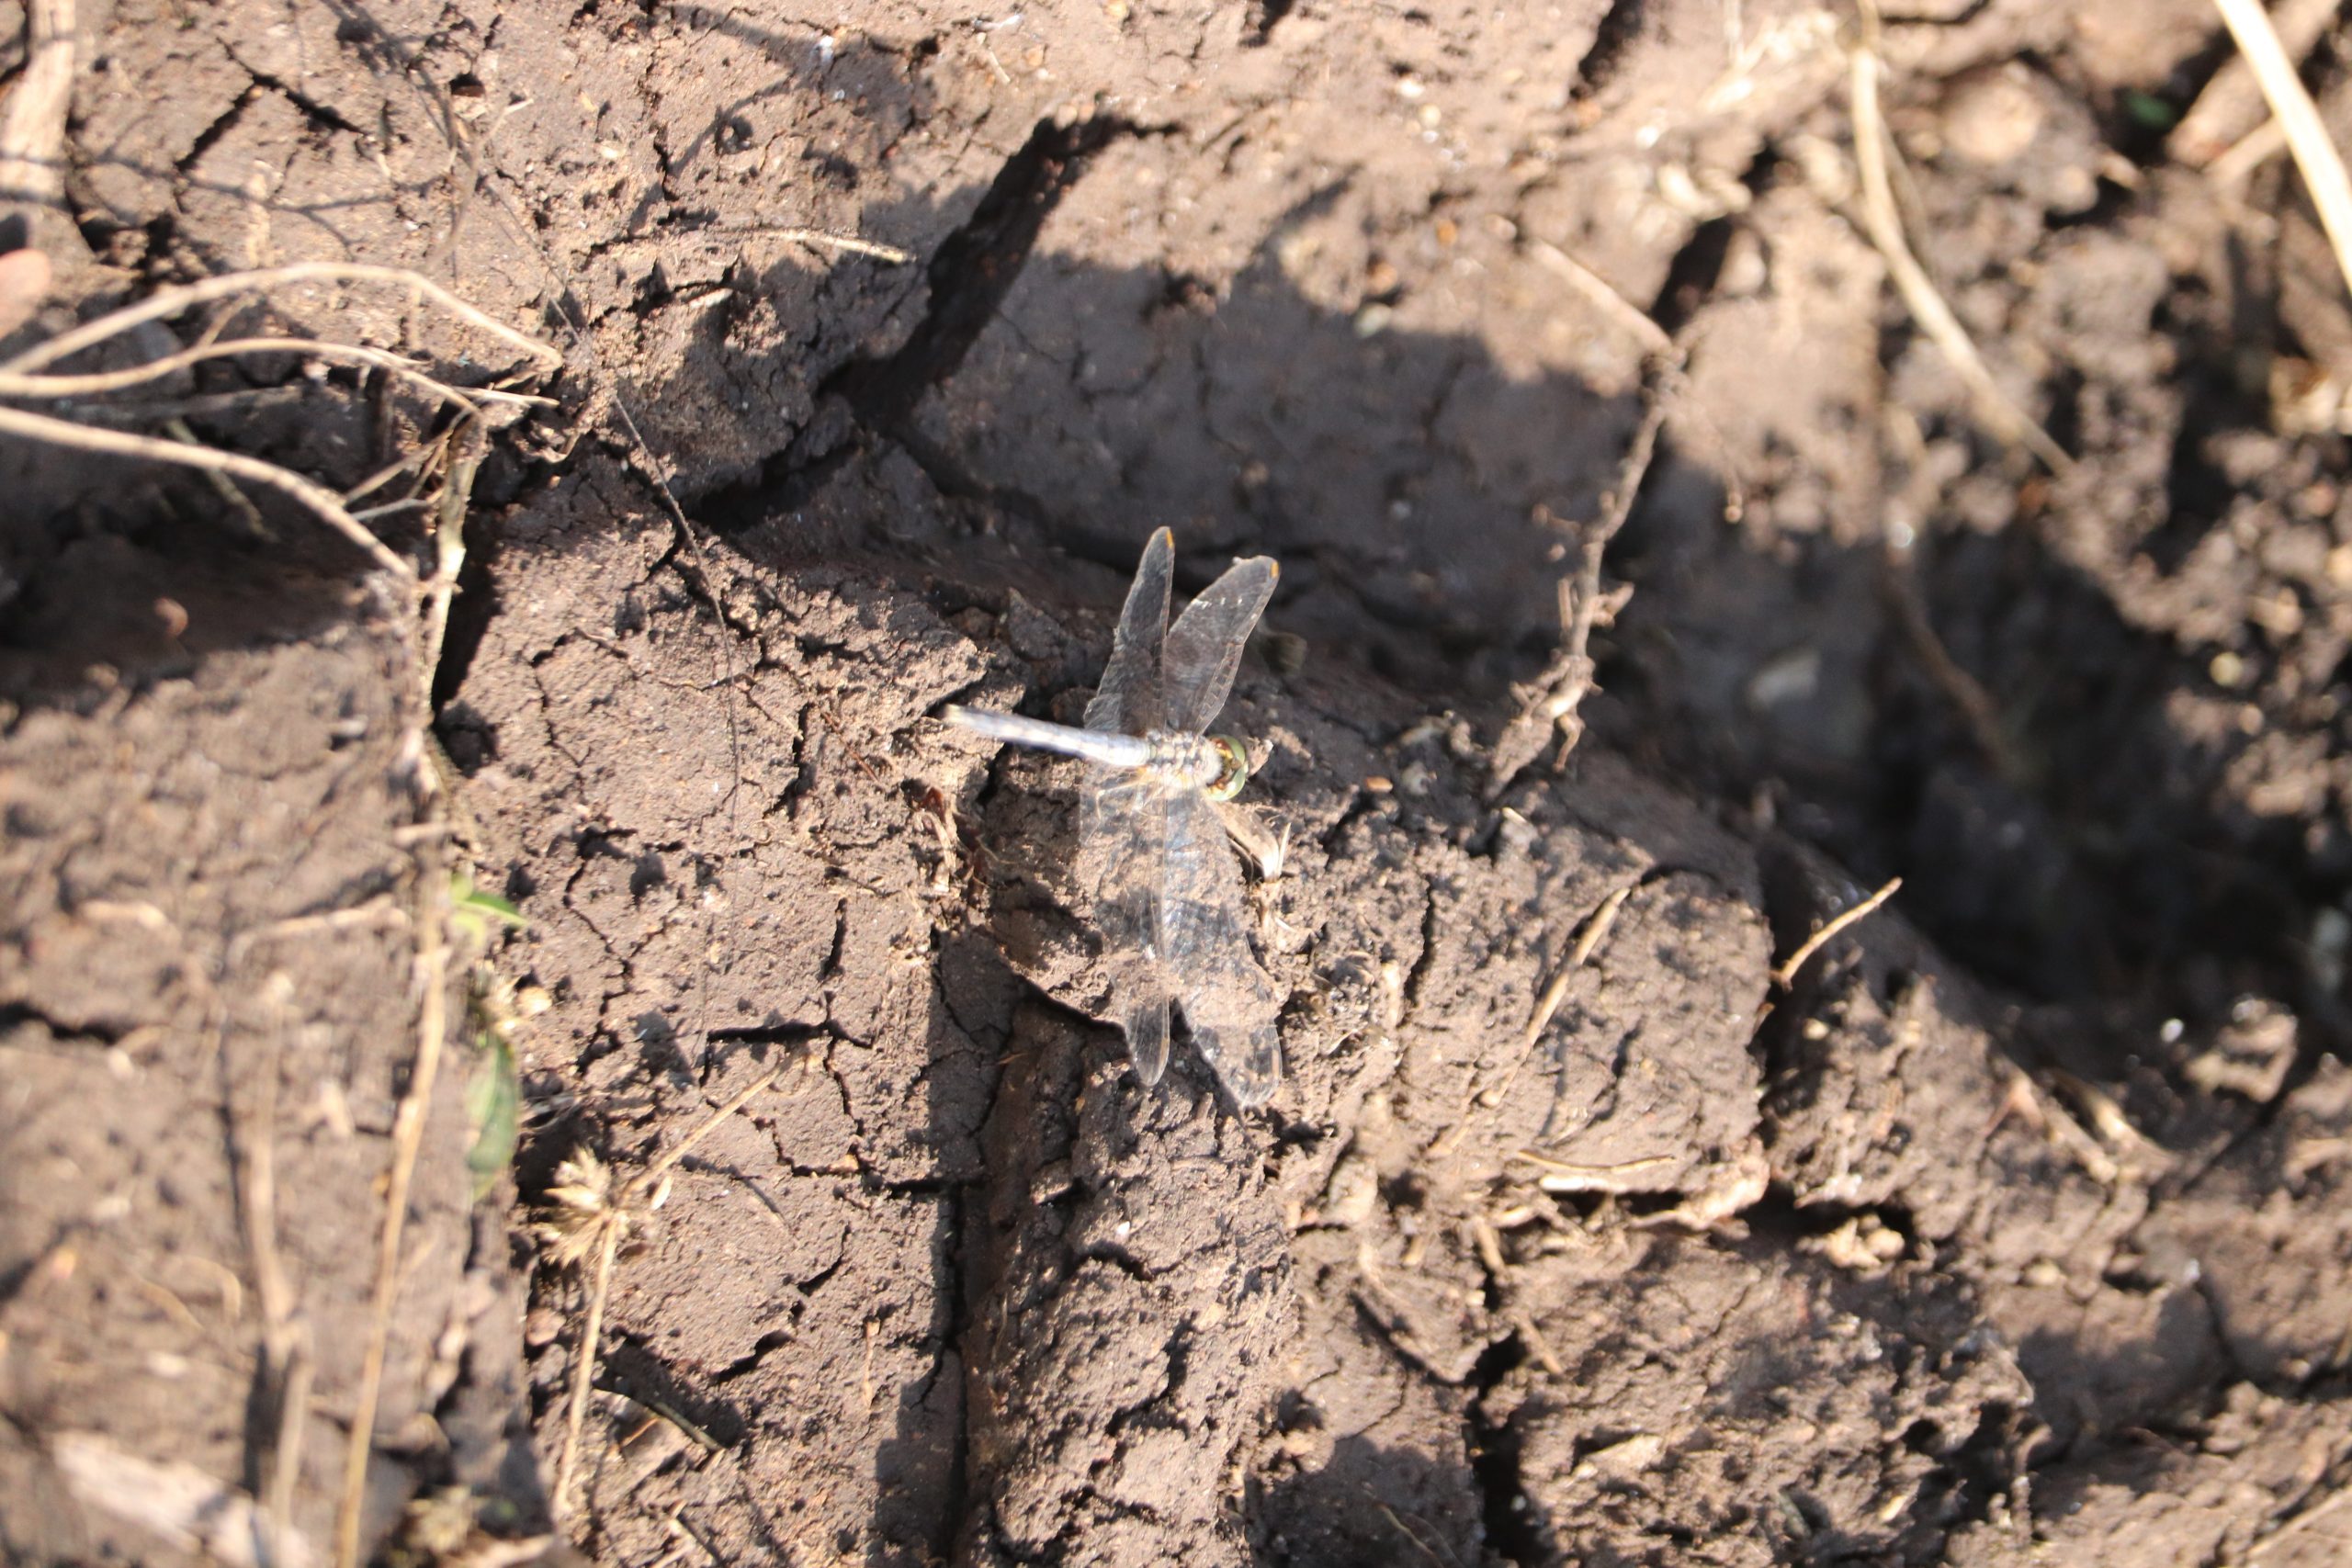 Dragonfly on soil